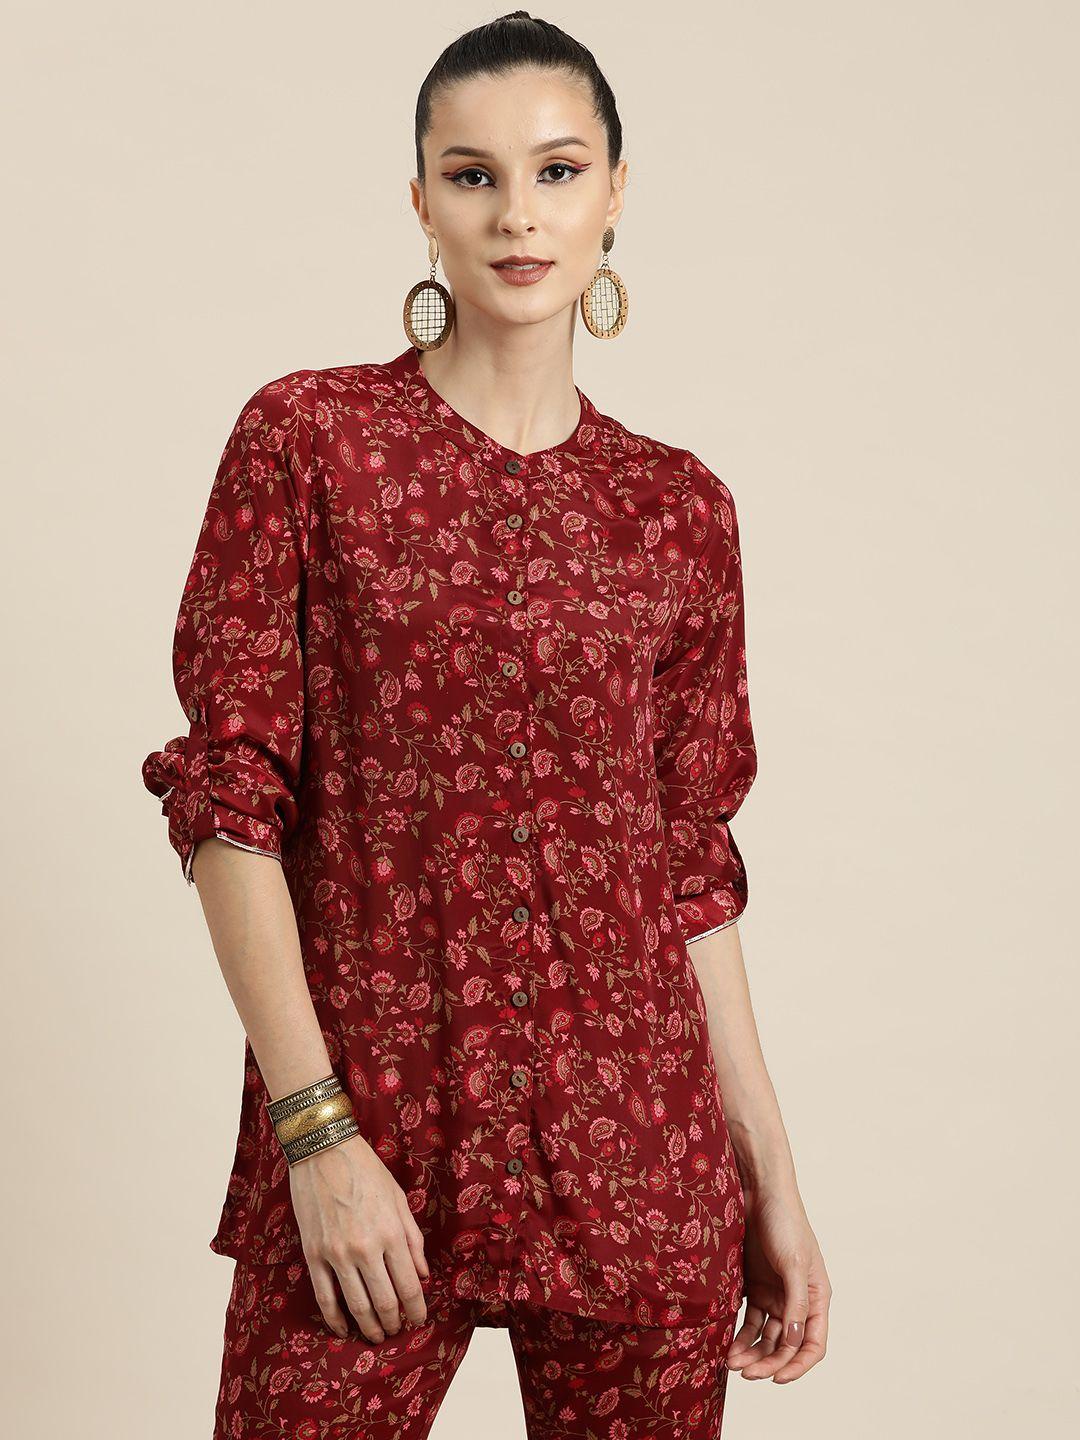 shae by sassafras women maroon floral printed shirt